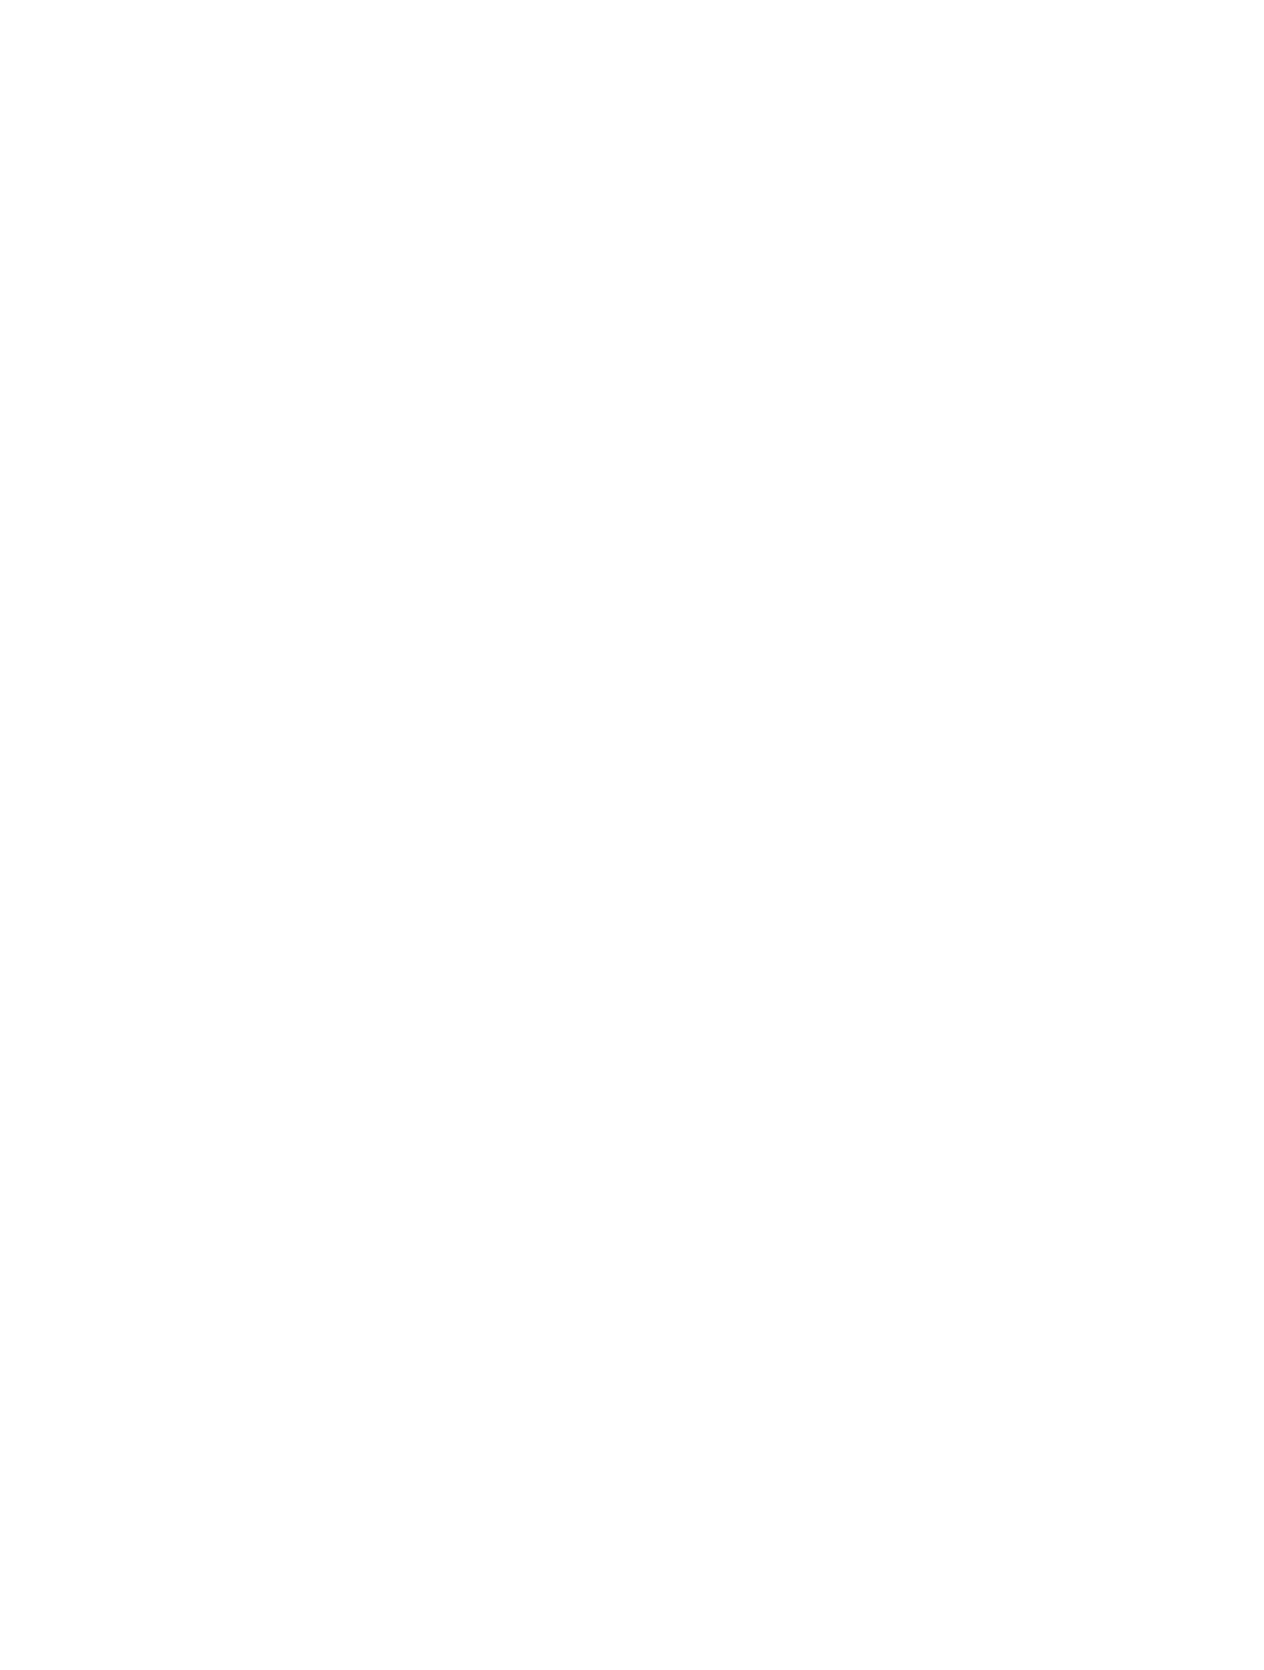 Jacobs Engineering logo pour fonds sombres (PNG transparent)